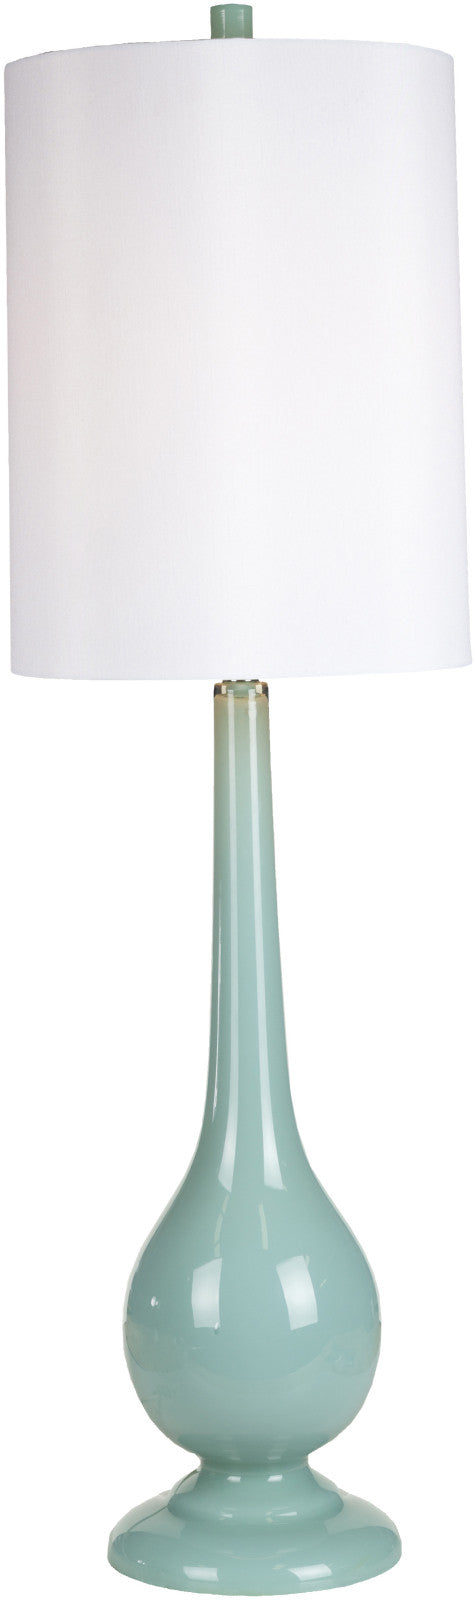 Surya Glass LMP-1056 White Lamp Table Lamp